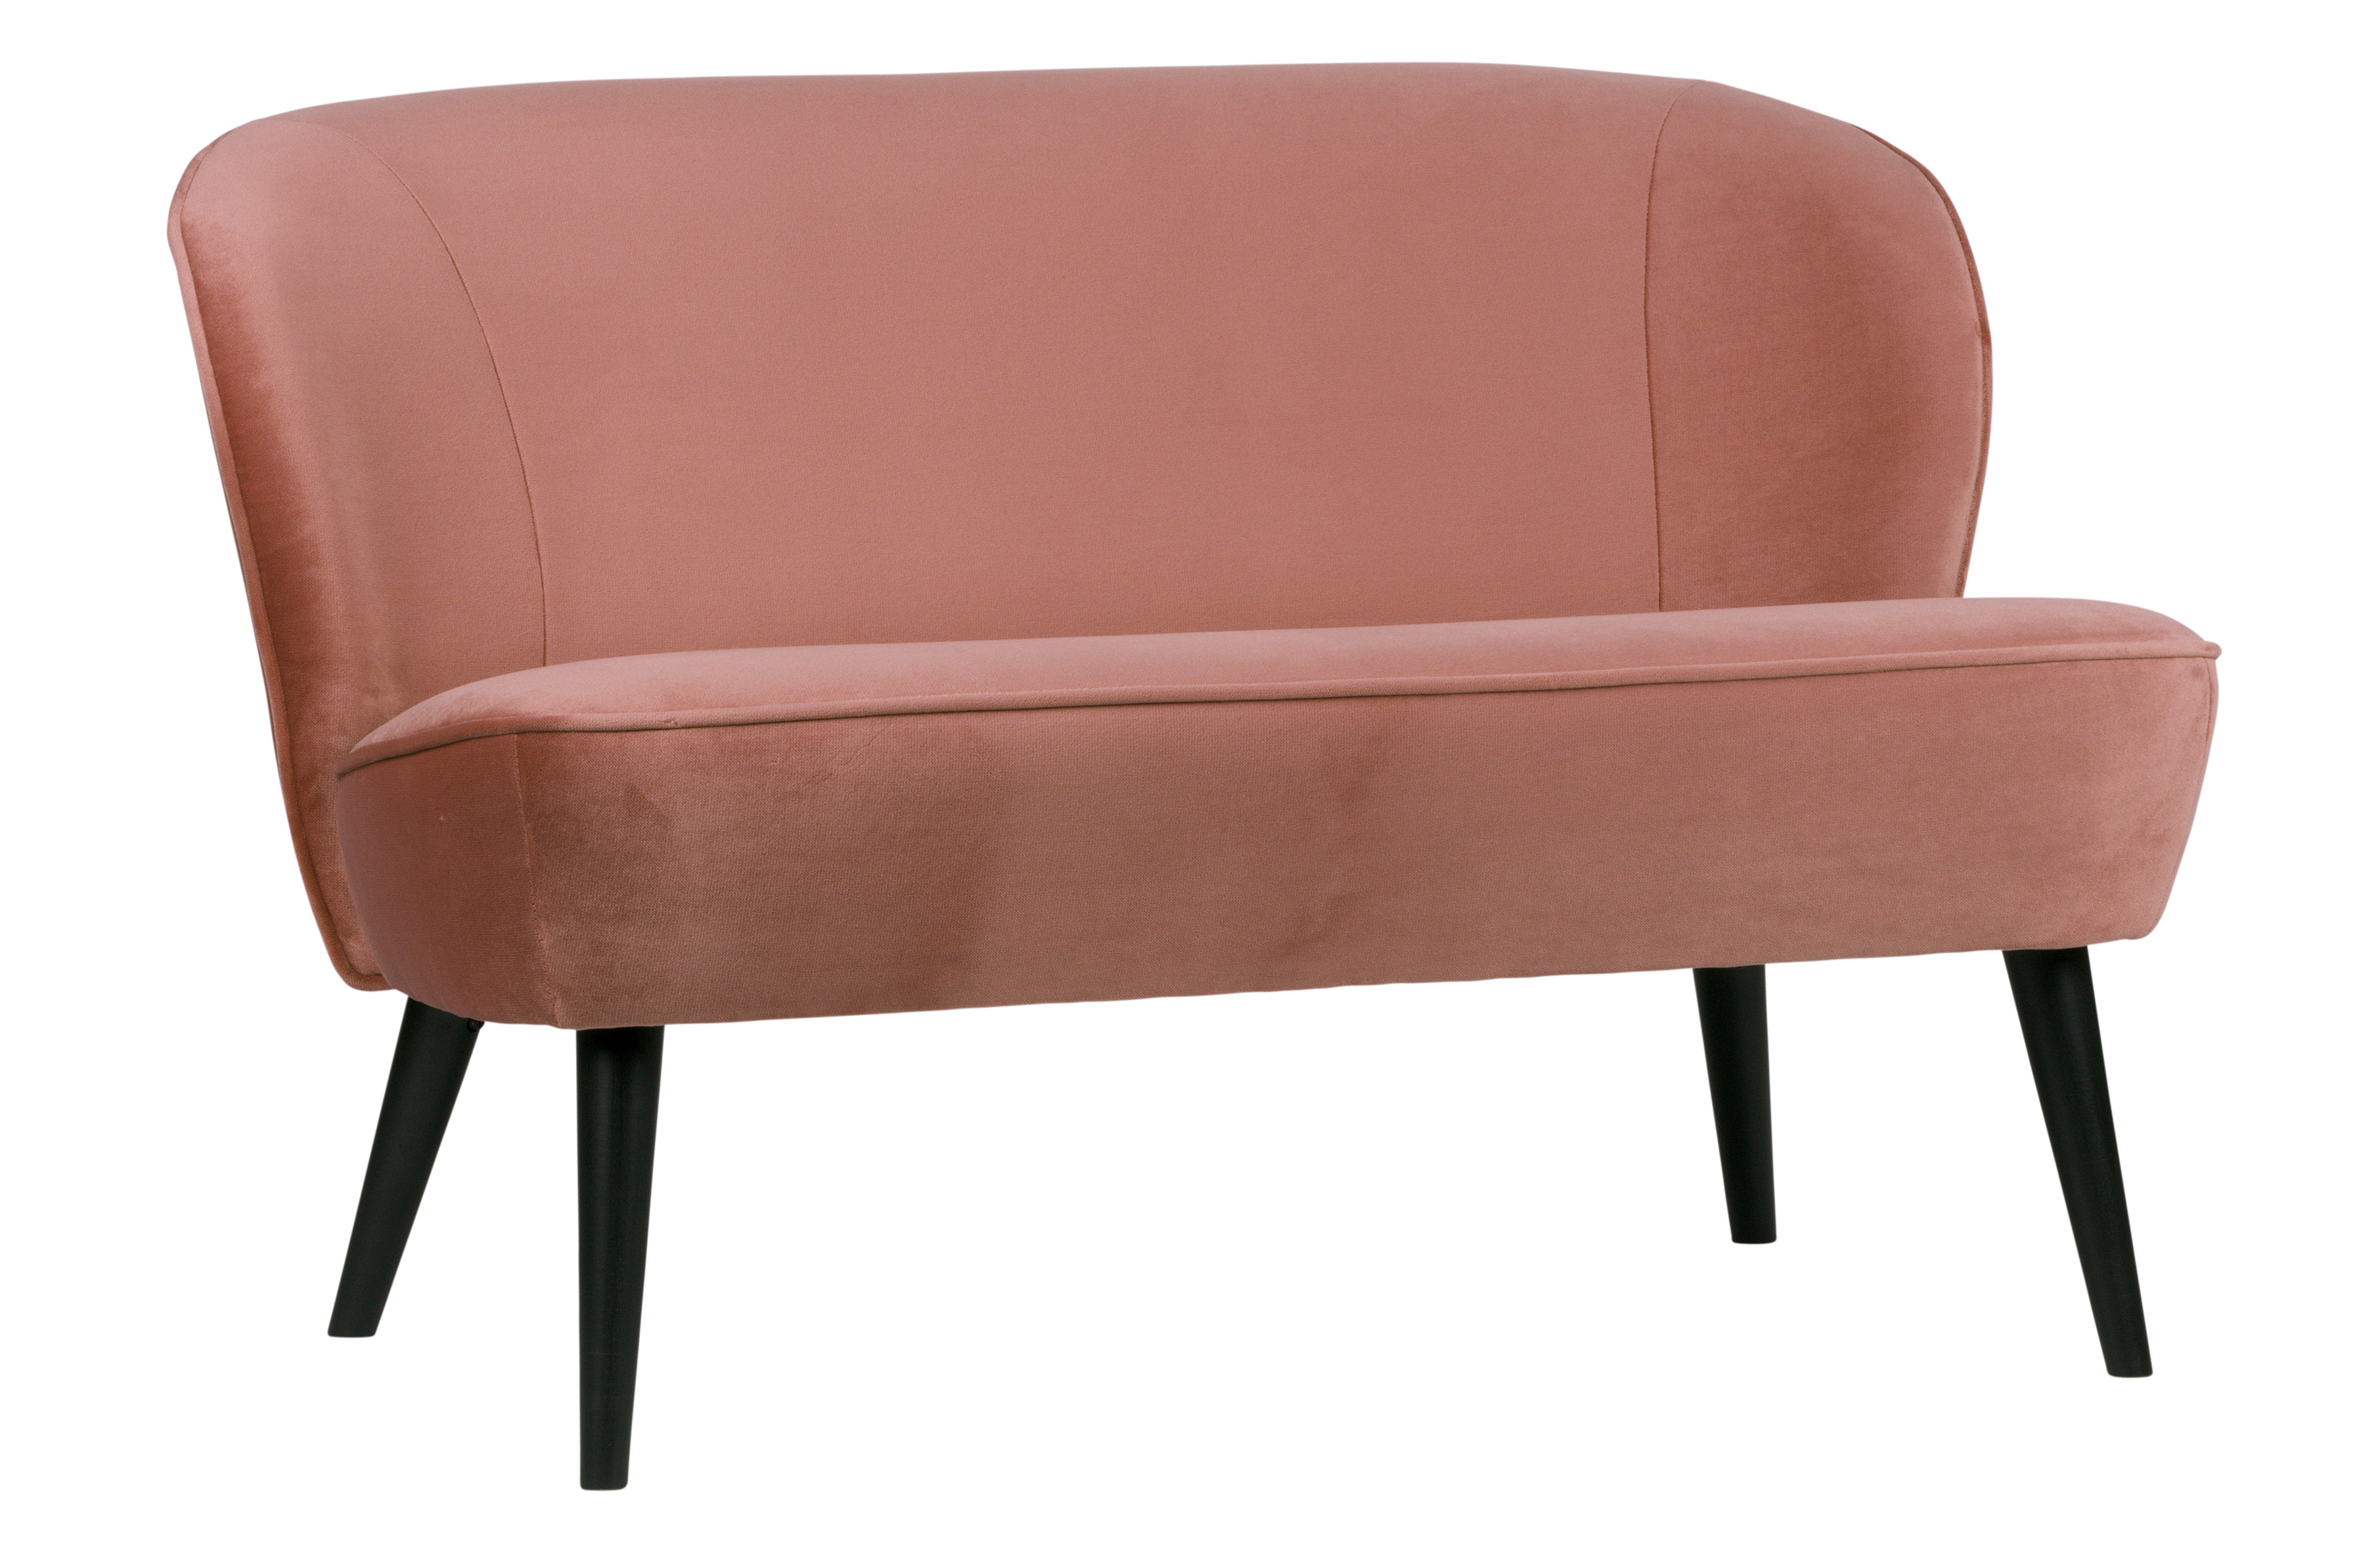 Rent a Sofa Sara velvet pink? Rent at KeyPro furniture rental!